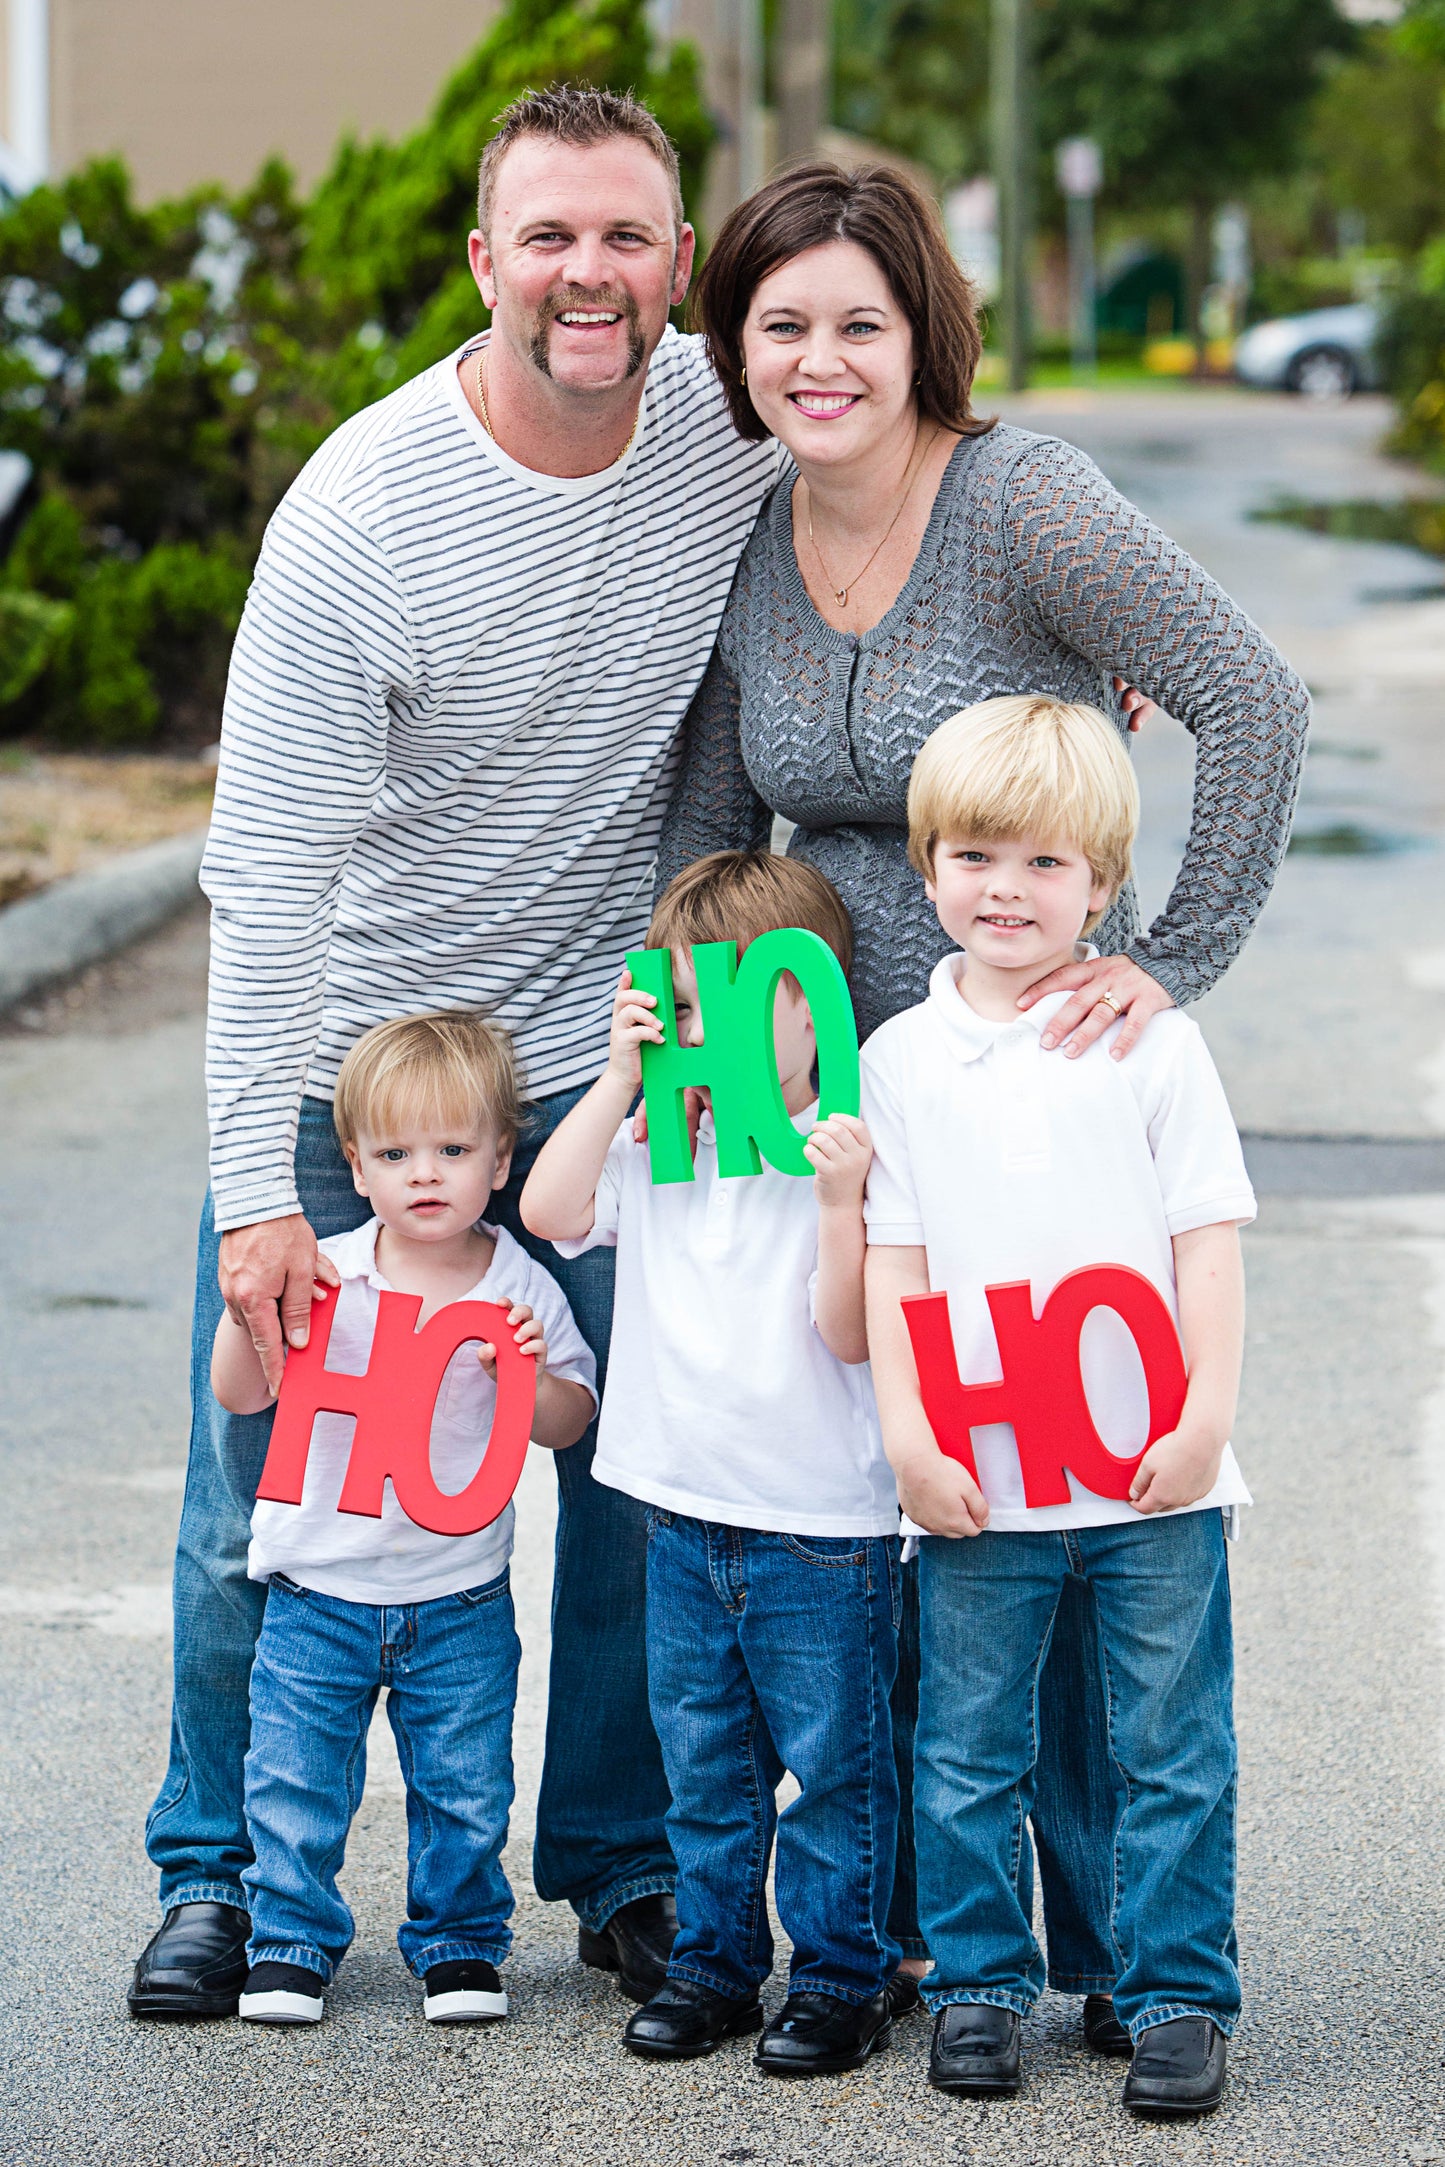 Holiday Card Photo Prop "Ho Ho Ho" - Wedding Decor Gifts